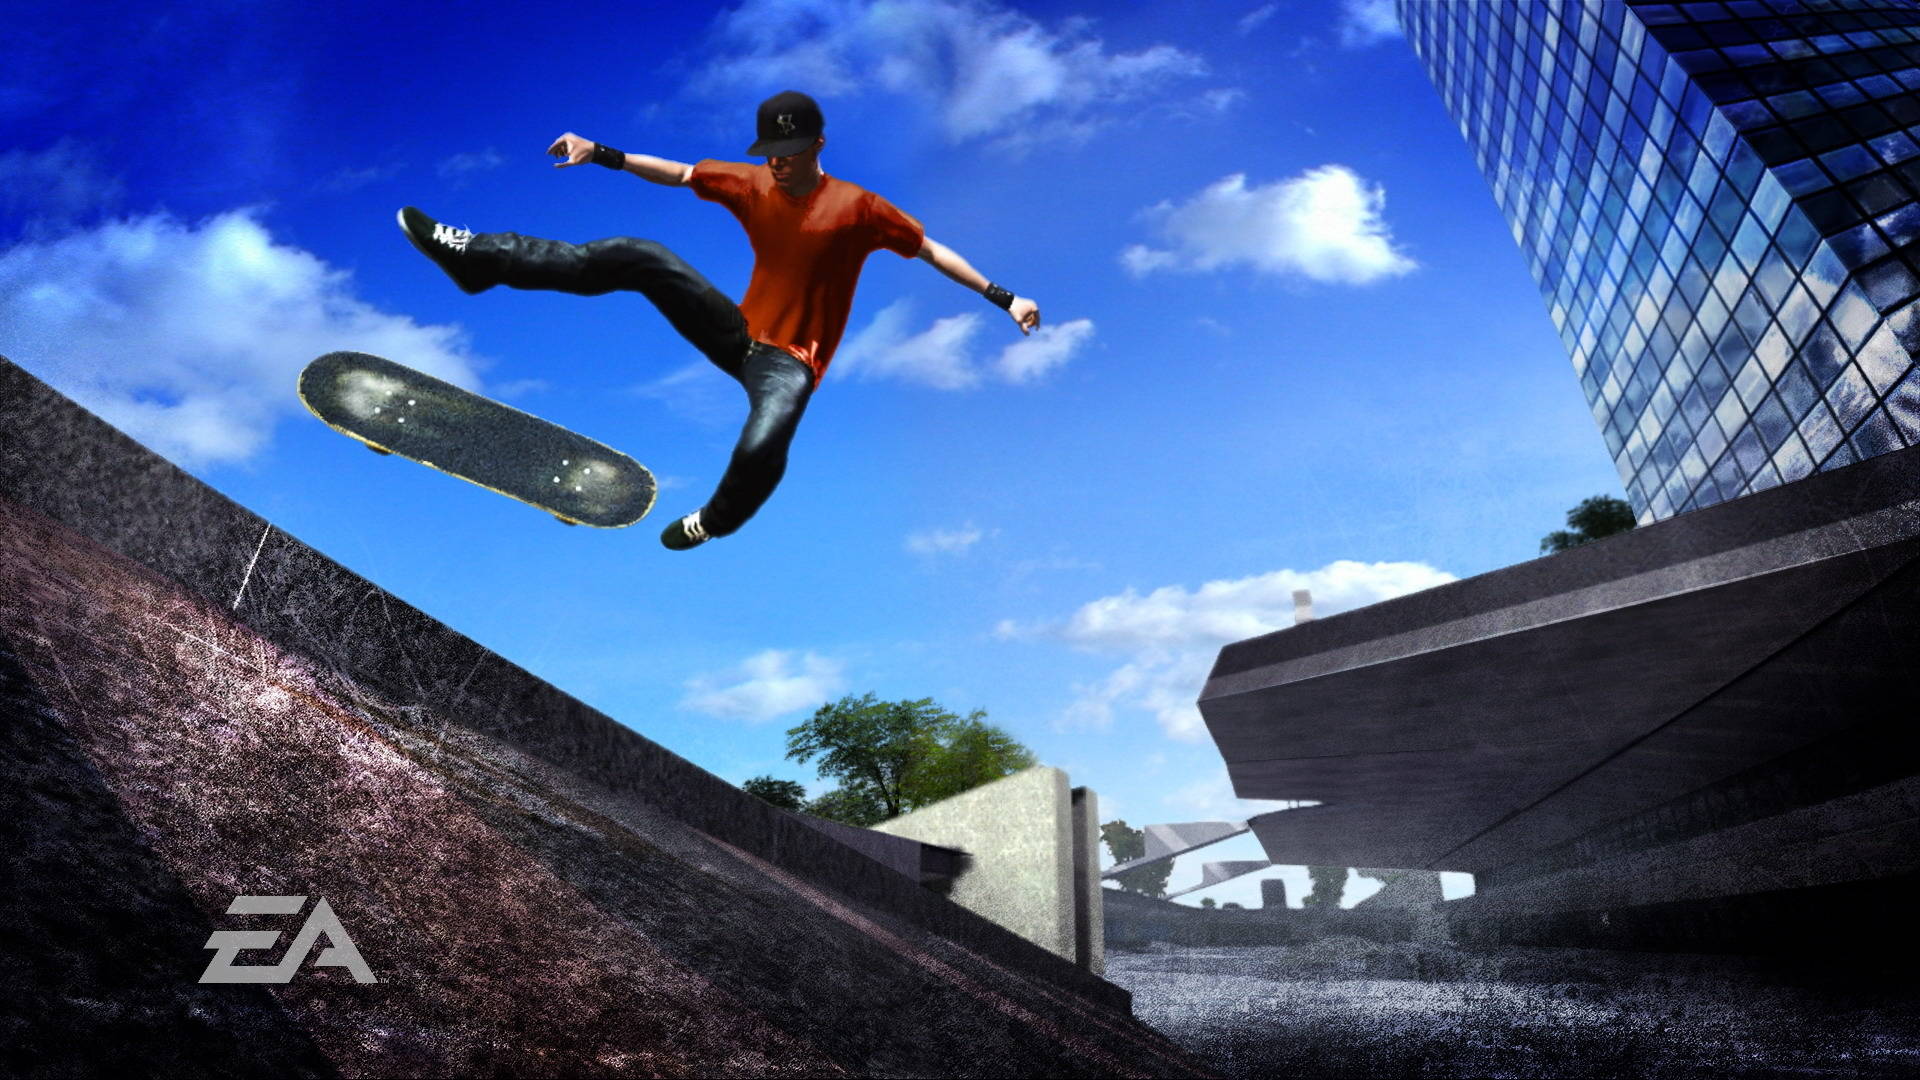 Best skate 3. Electronic Arts Skate 3. Electronic Arts Skate 4. Skate 3 игра Bob. Скейтборд.